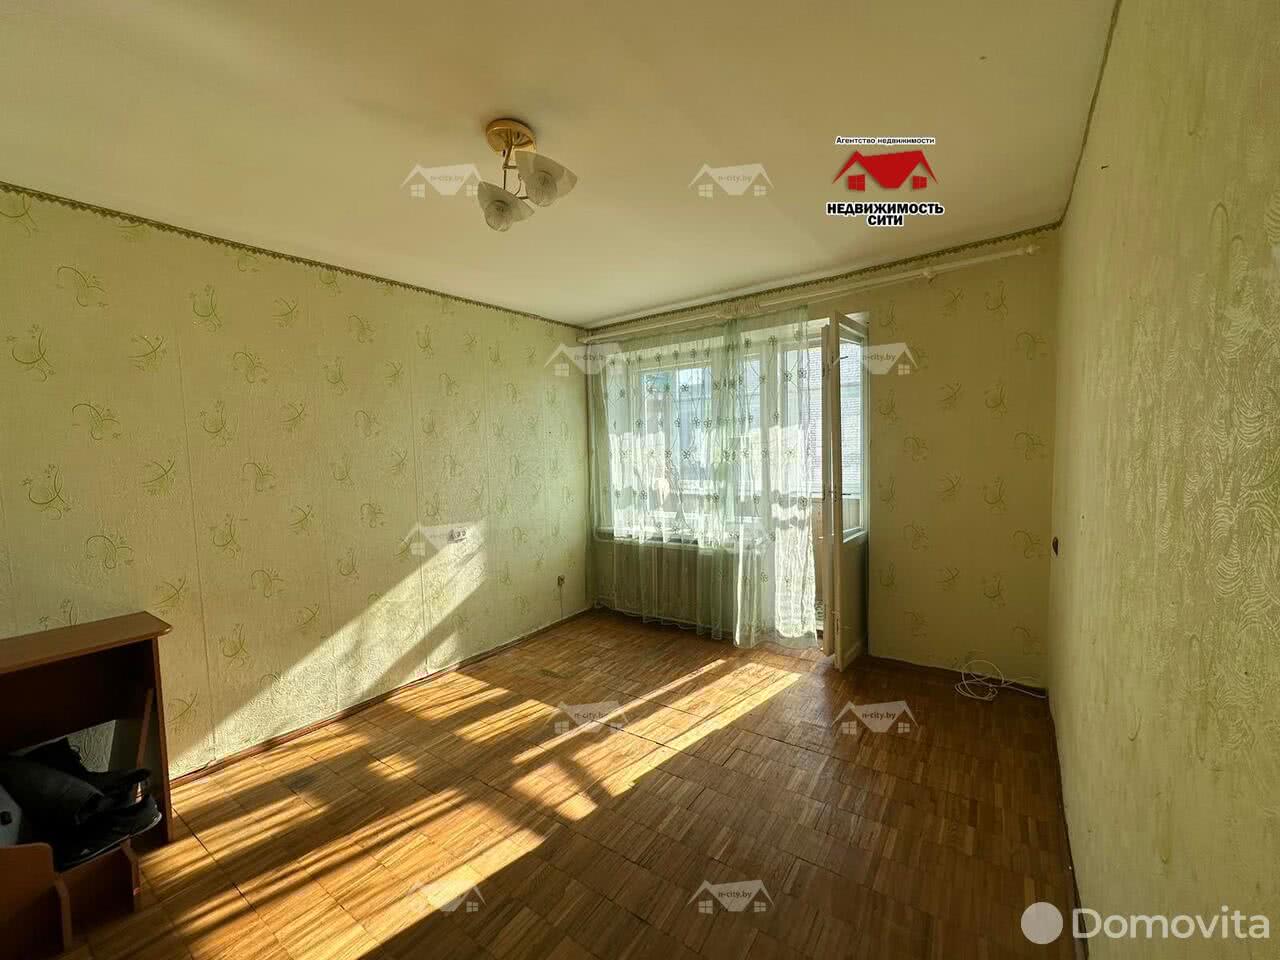 Цена продажи квартиры, Горки, ул. Калинина, д. 29